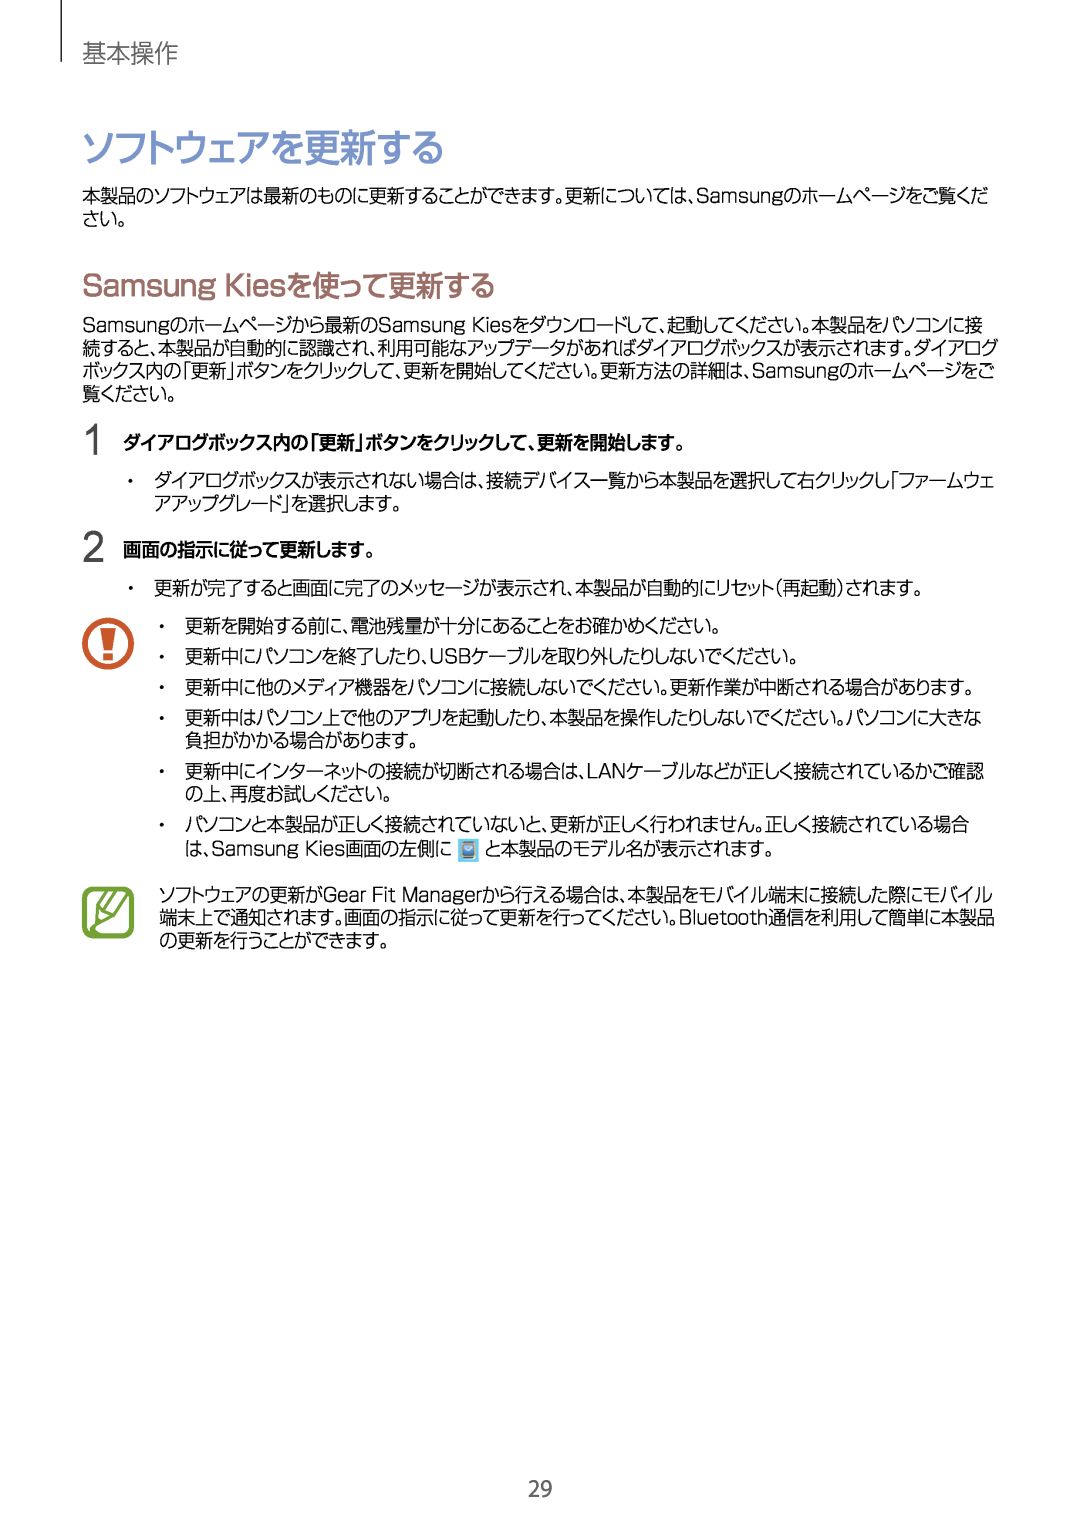 Samsung SM-R3500ZKADCM, SM-R3500ZKAXJP, SM-R3500ZKAKDI, SM-R3500ZKAEUX manual ソフトウェアを更新する, Samsung Kiesを使って更新する, 基本操作 